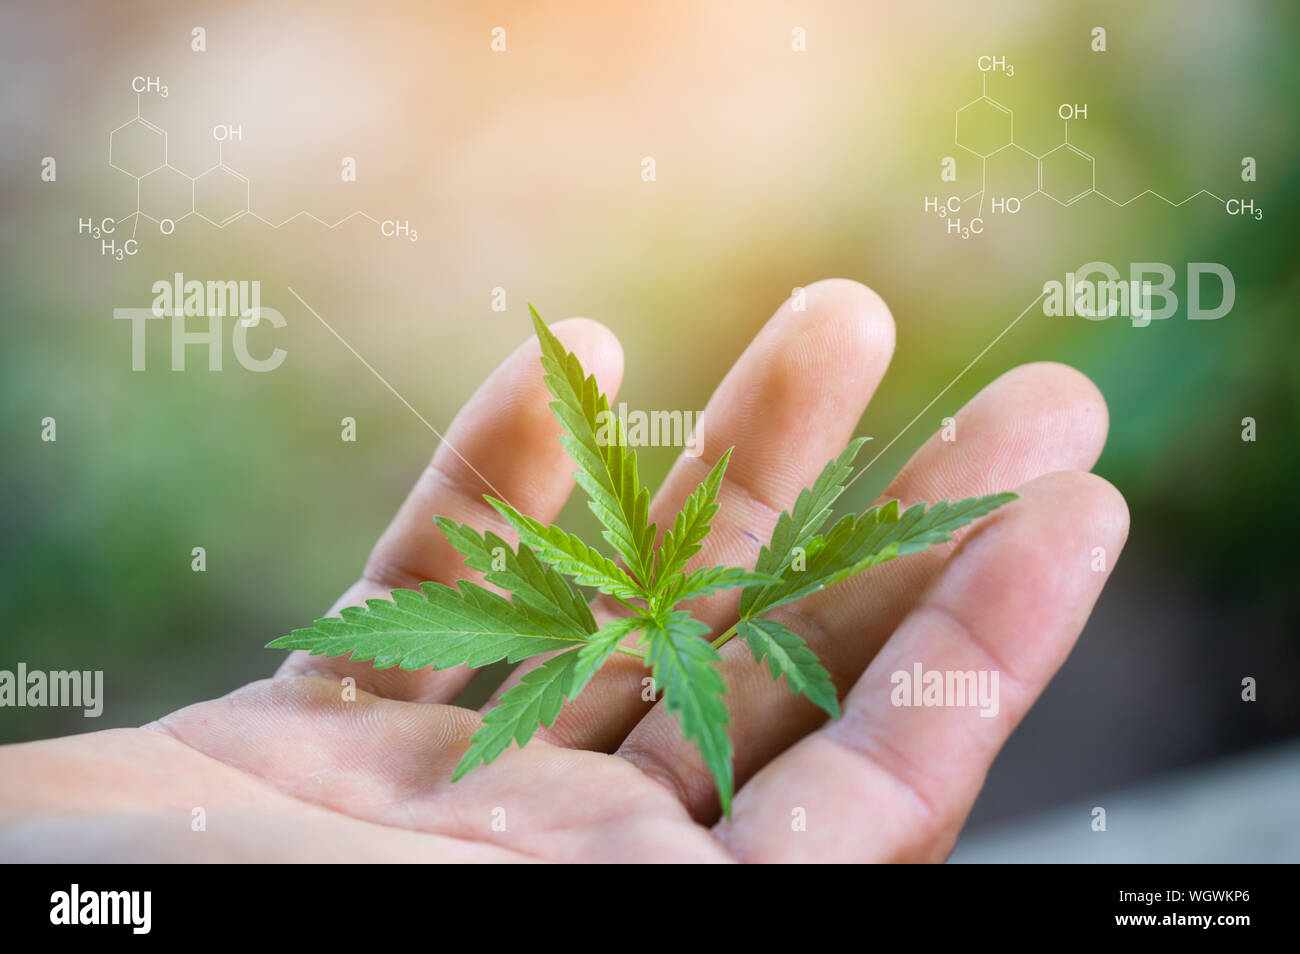 Hand holding marijuana leaf with cbd thc chemical structure Stock Photo